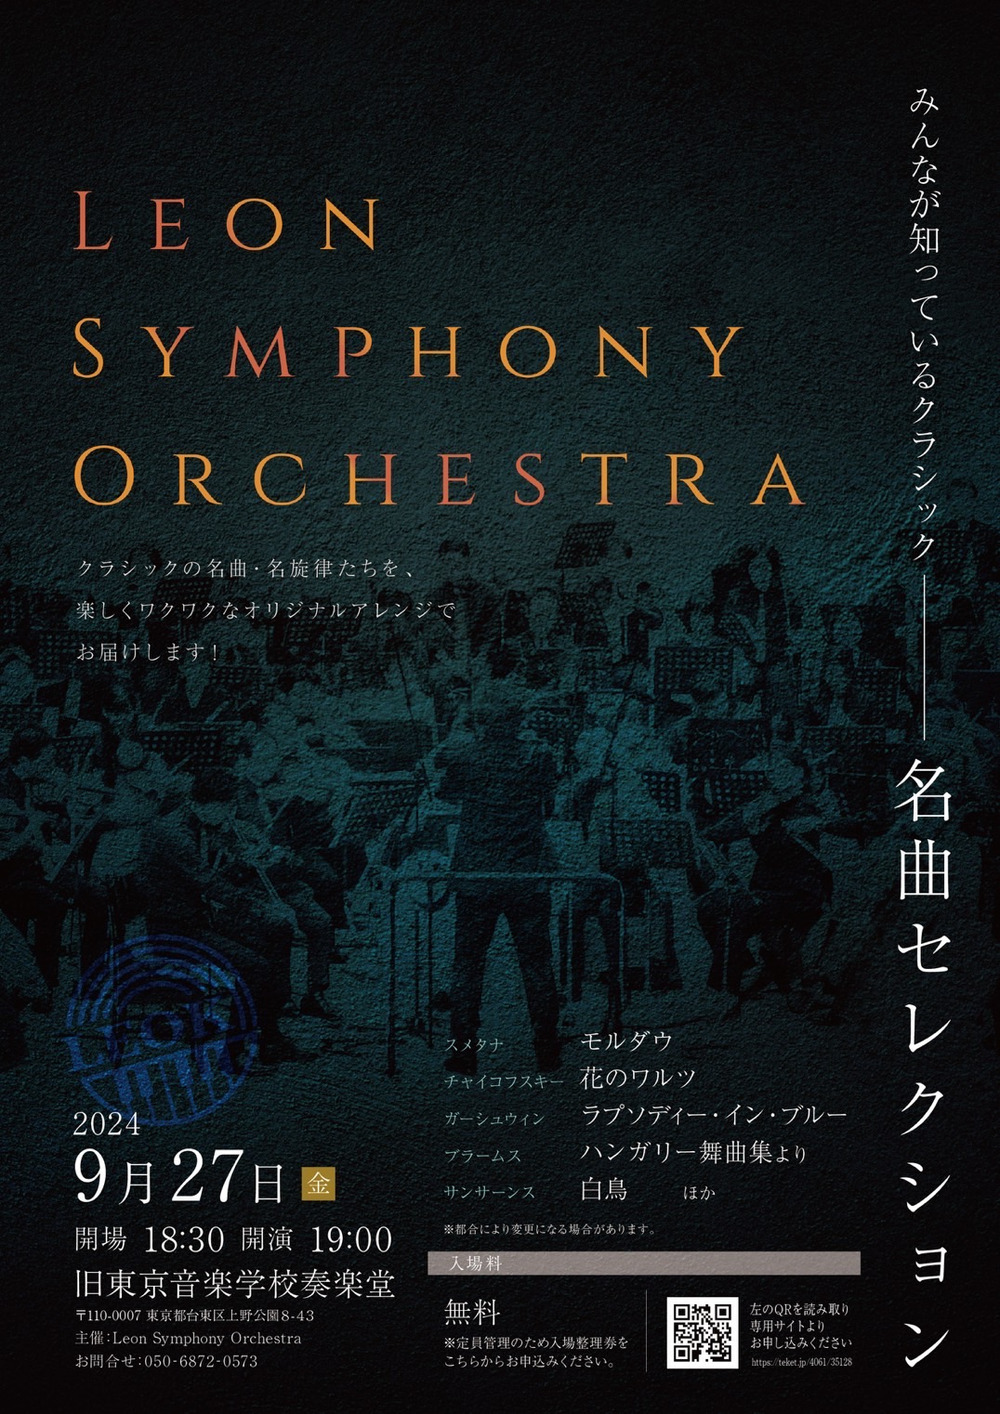 Leon Symphony Orchestra クラシック名曲セレクション【Leon Symphony Jazz Orchestra】 |  旧東京音楽学校奏楽堂